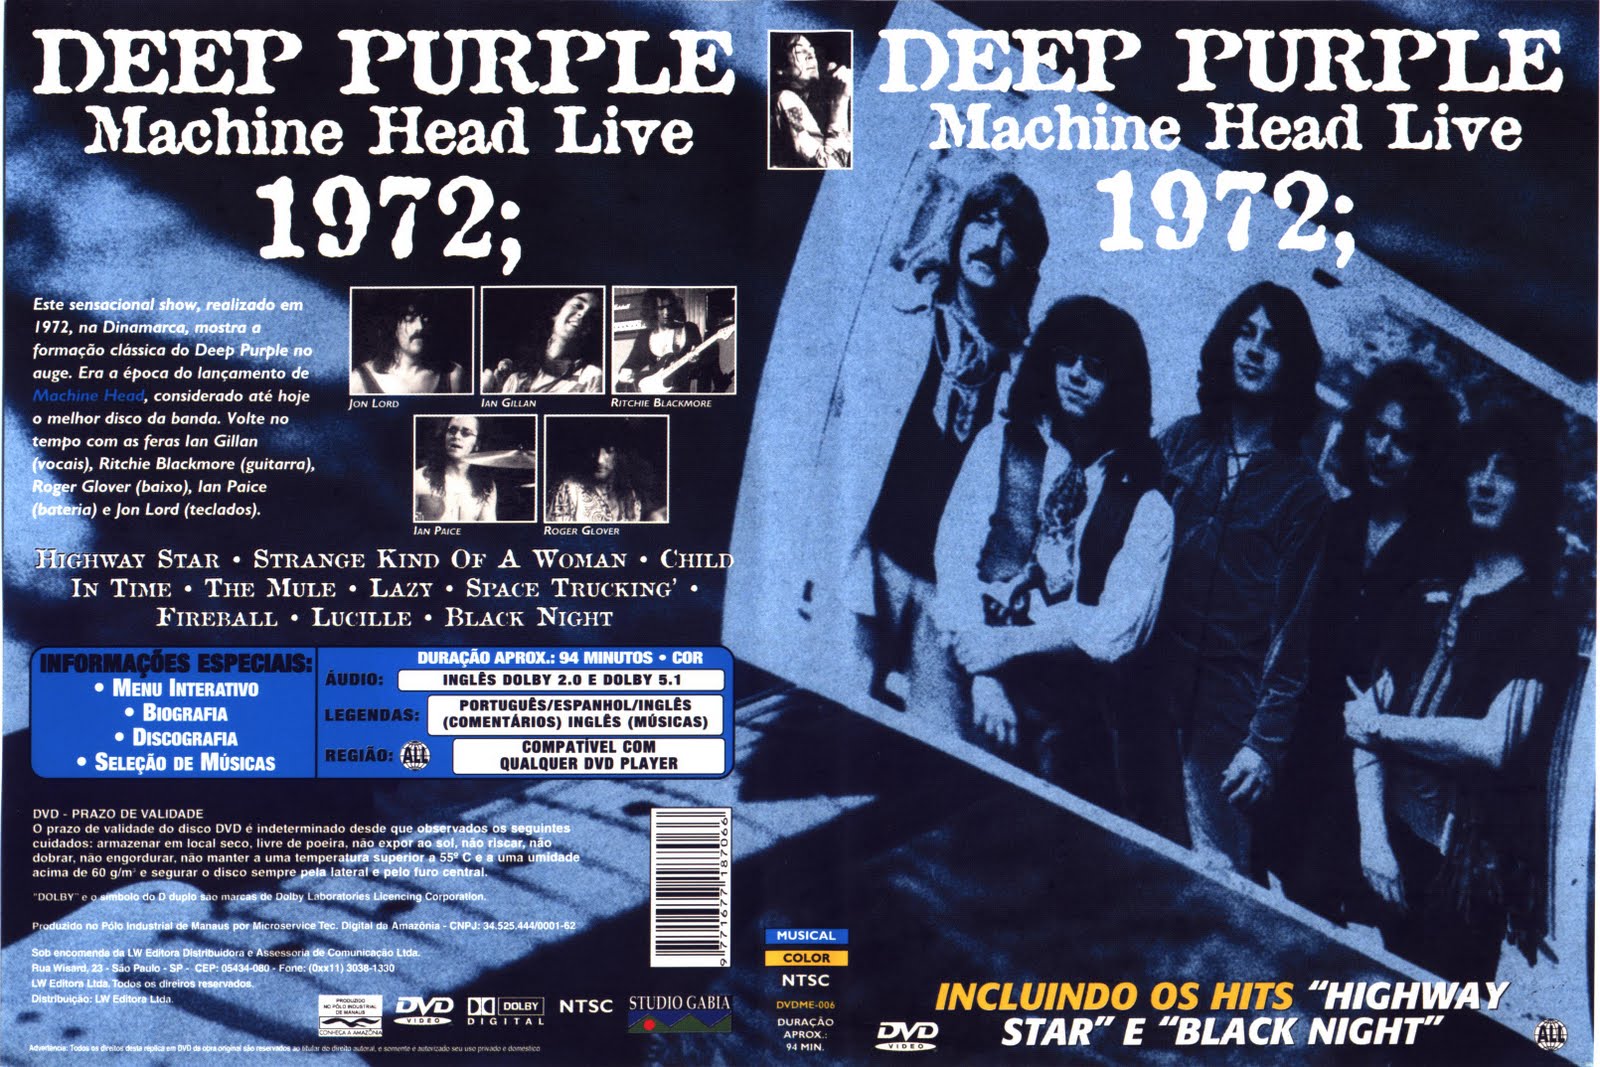 Дип перпл машин. Группа Deep Purple 1972. Deep Purple 1972 Live. Концерт дип перпл 1972. Deep Purple обложка DVD.